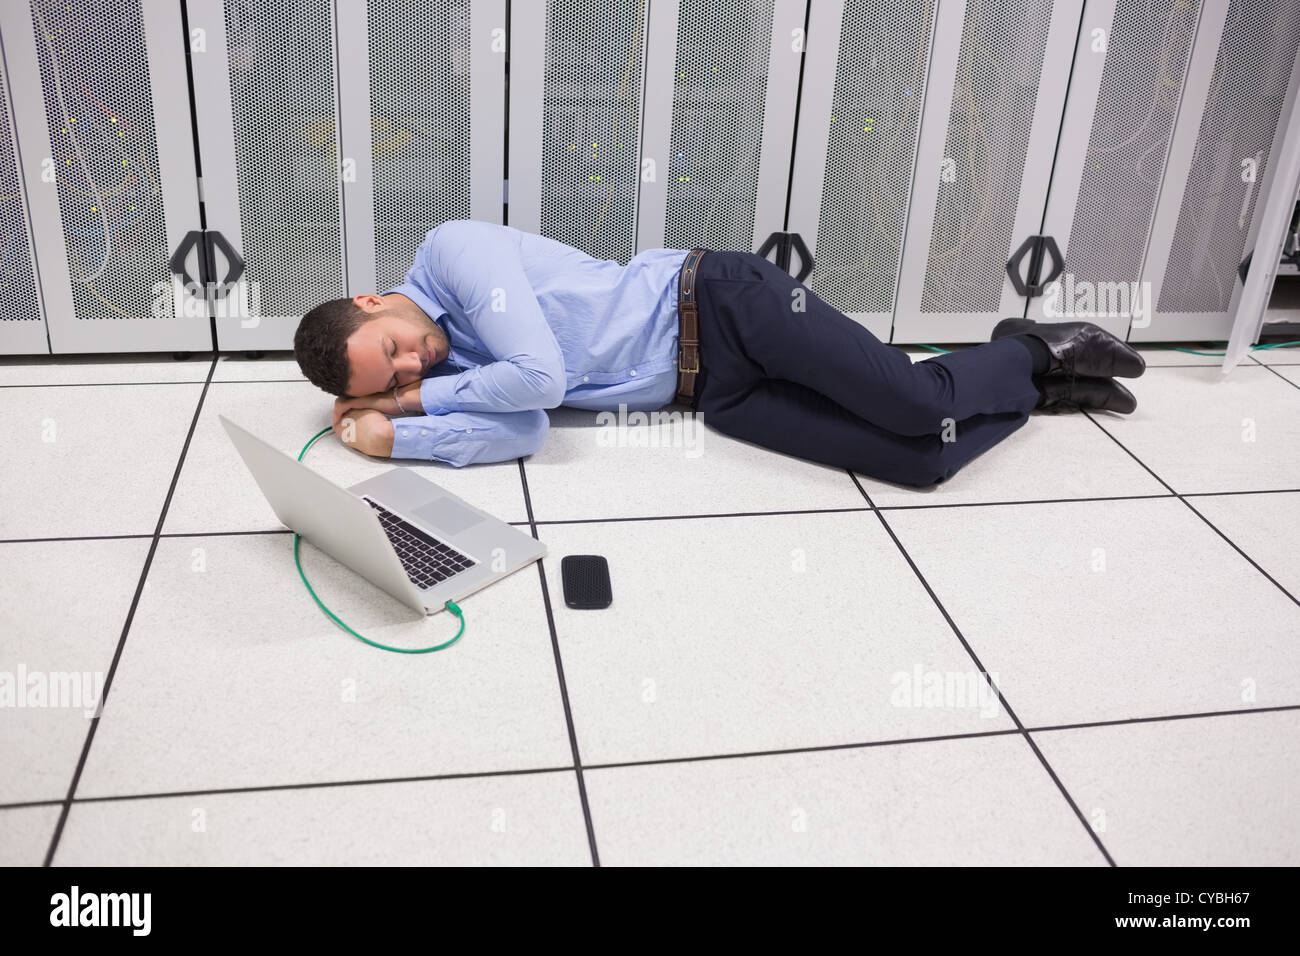 Man sleeping in data center Stock Photo